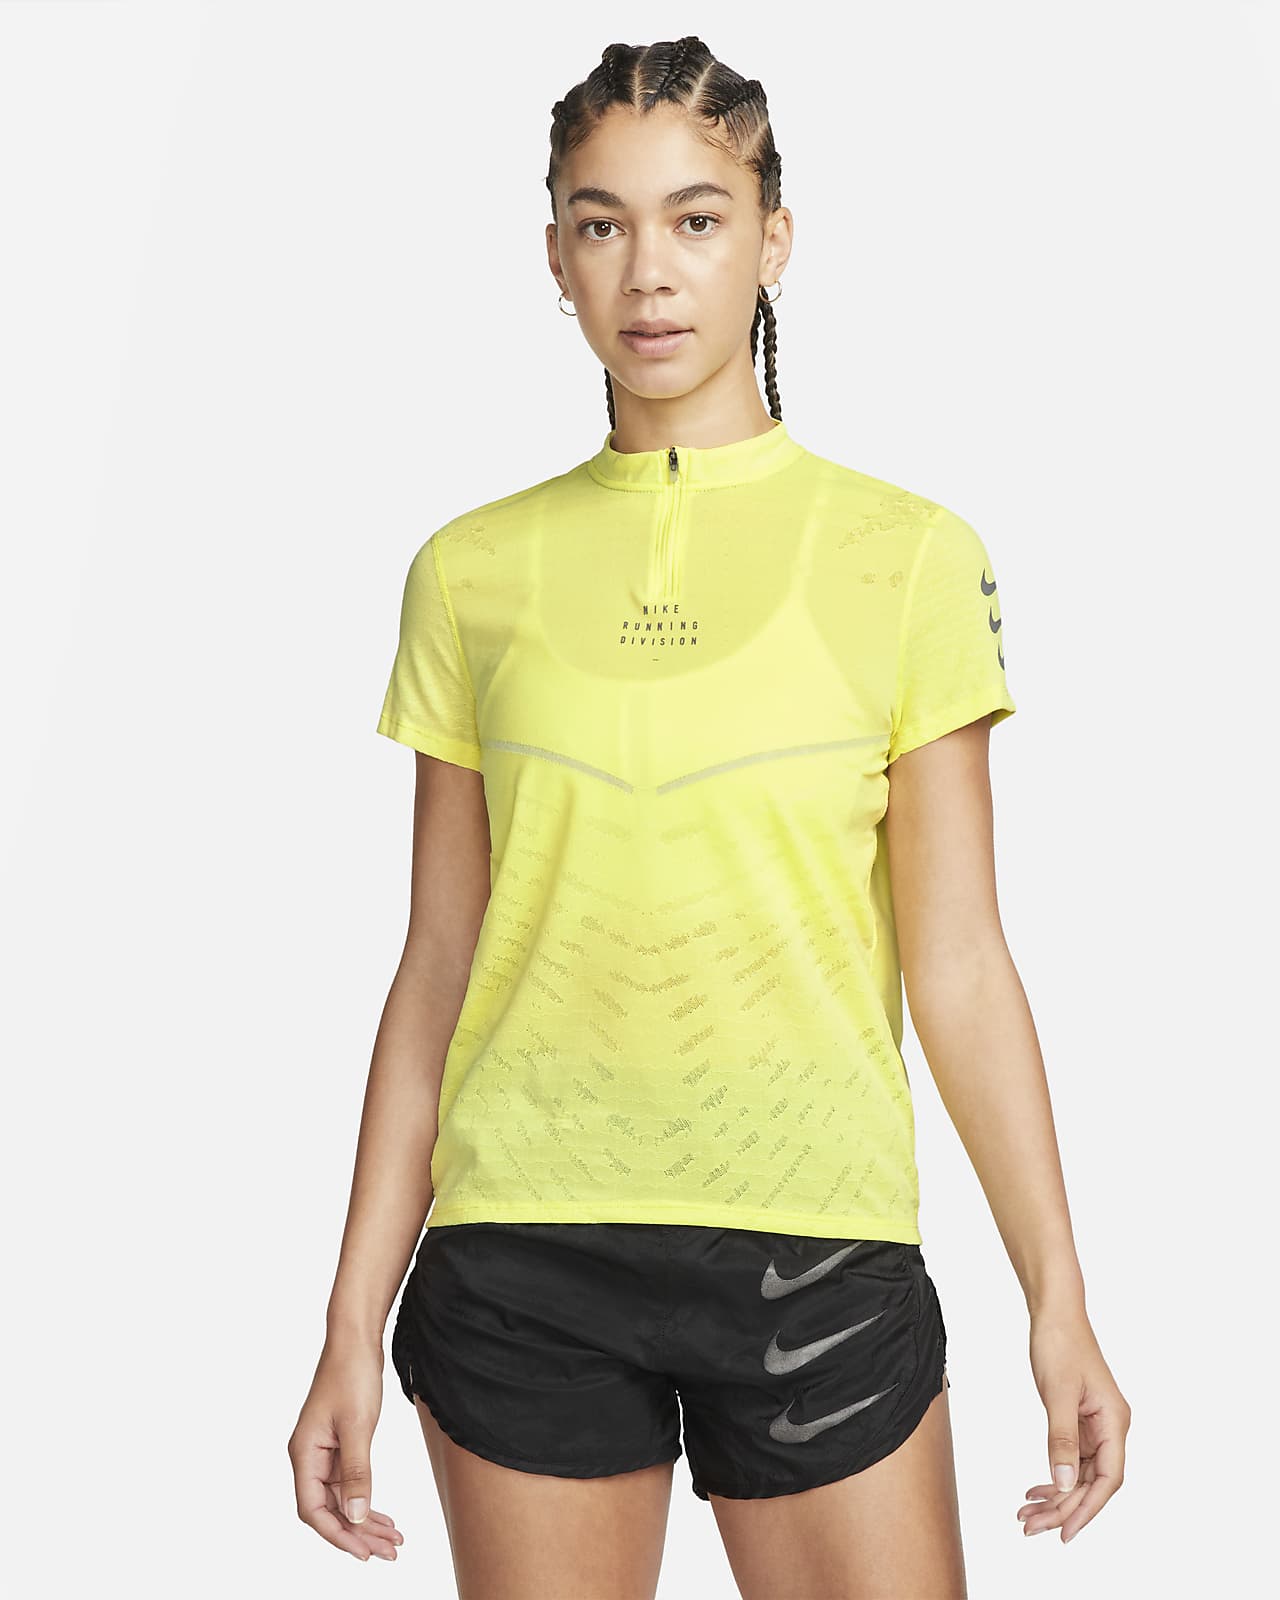 Nike Dri-FIT ADV Run Division Women's Engineered Short-Sleeve Running Top